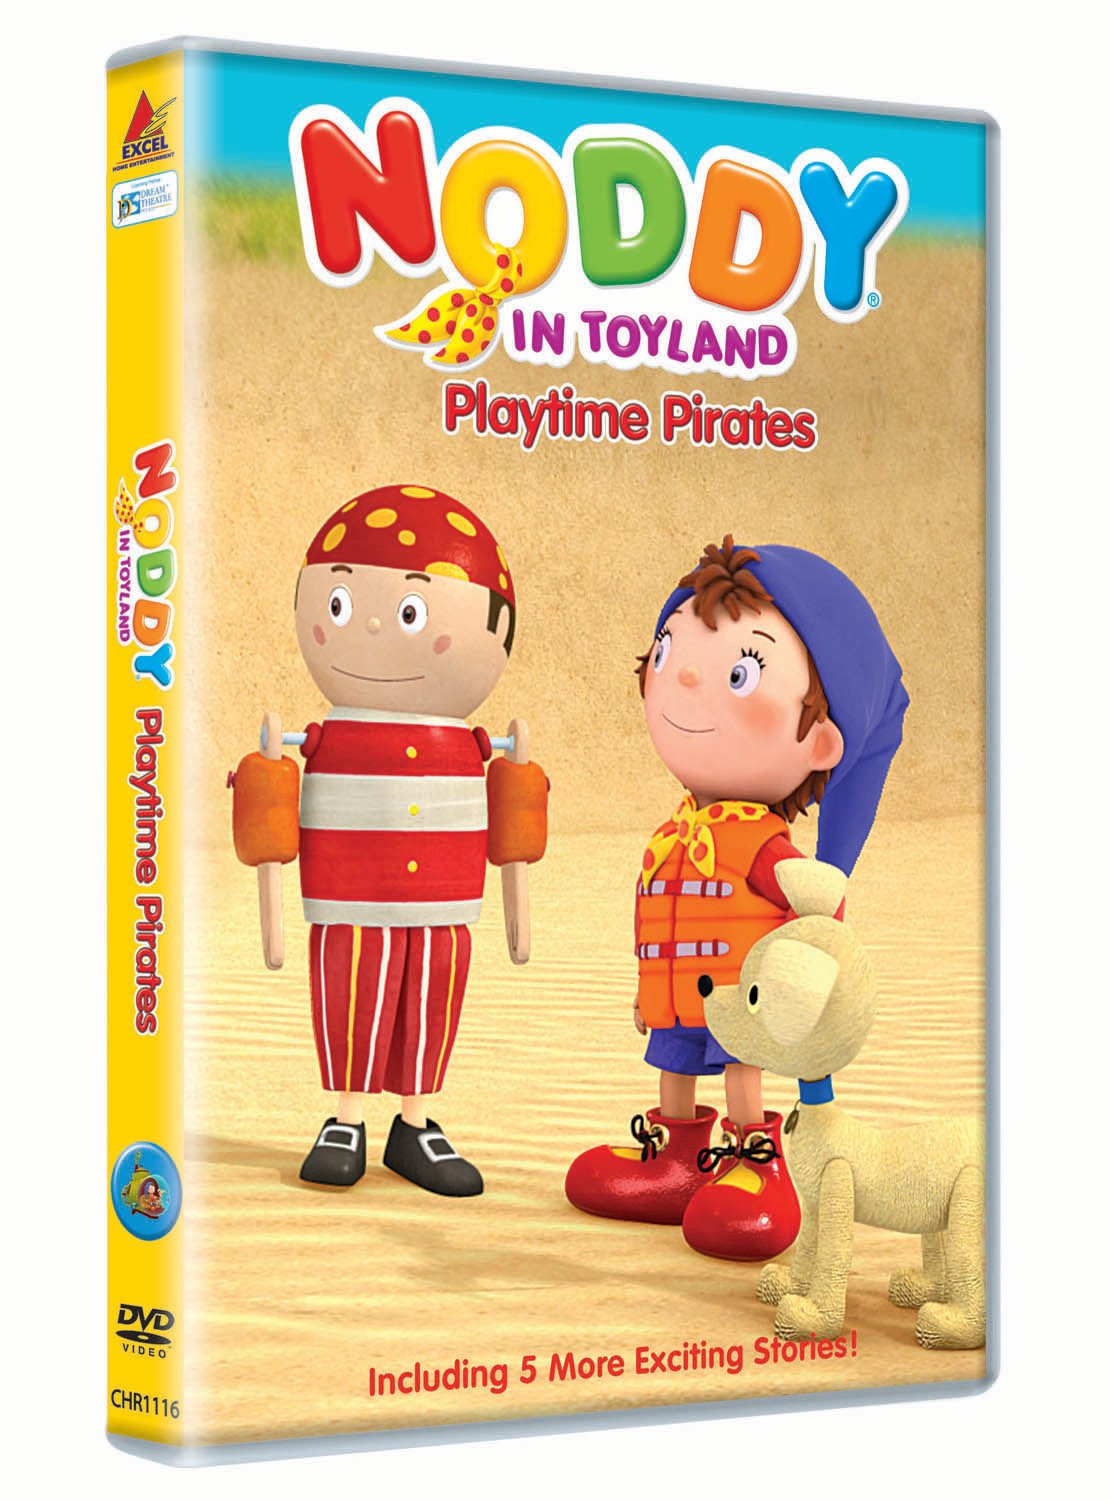 noddy-in-toyland-playtime-pirates-movie-purchase-or-watch-online